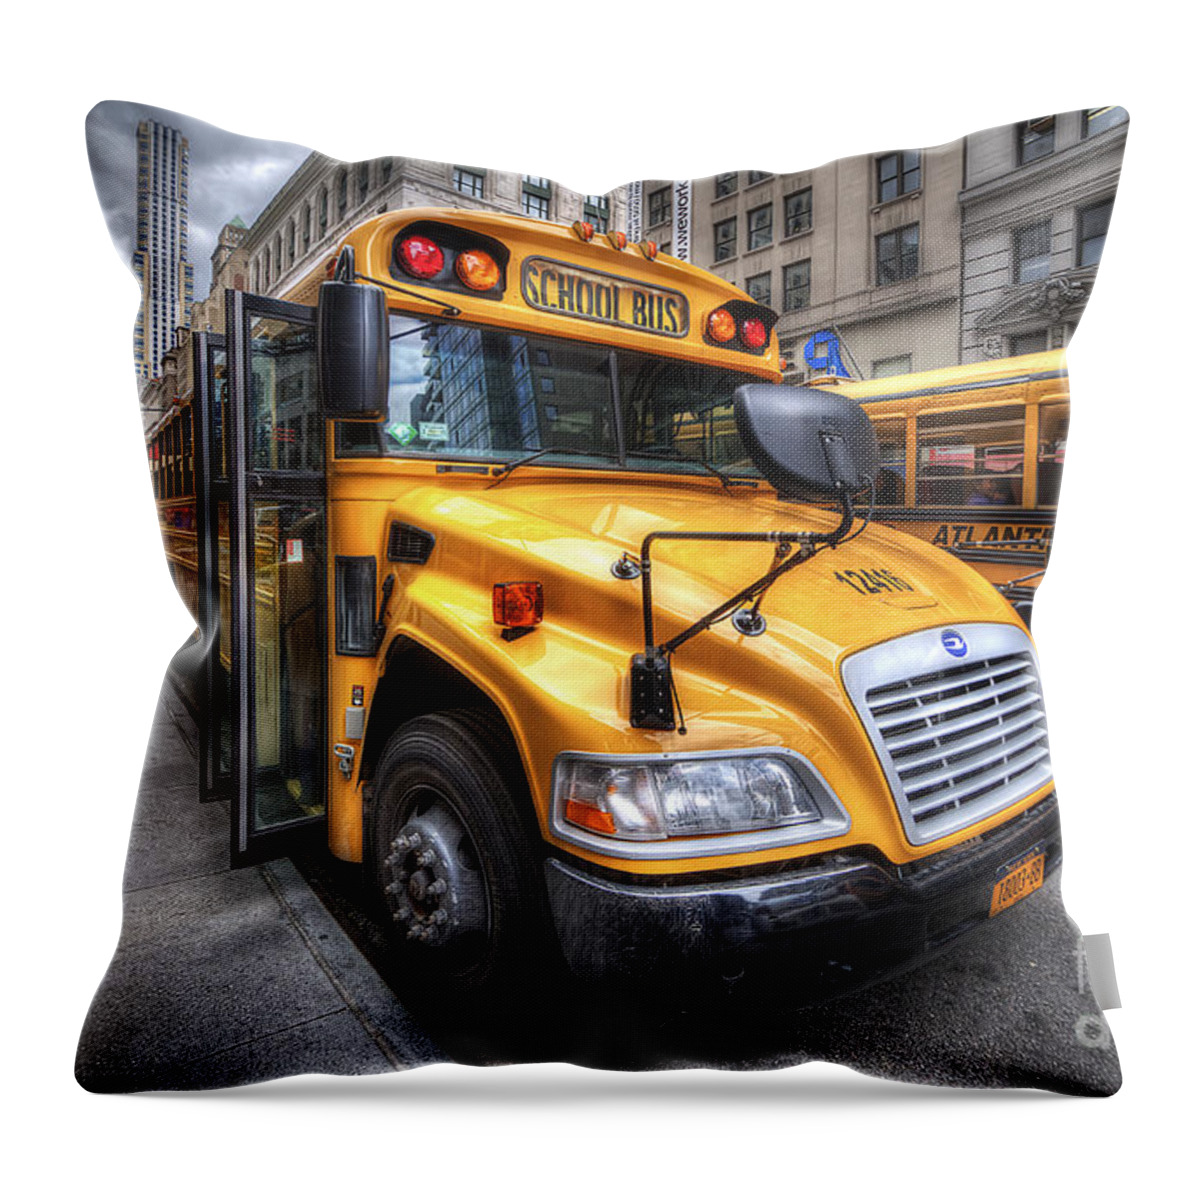 Yhun Suarez Throw Pillow featuring the photograph NYC School Bus by Yhun Suarez